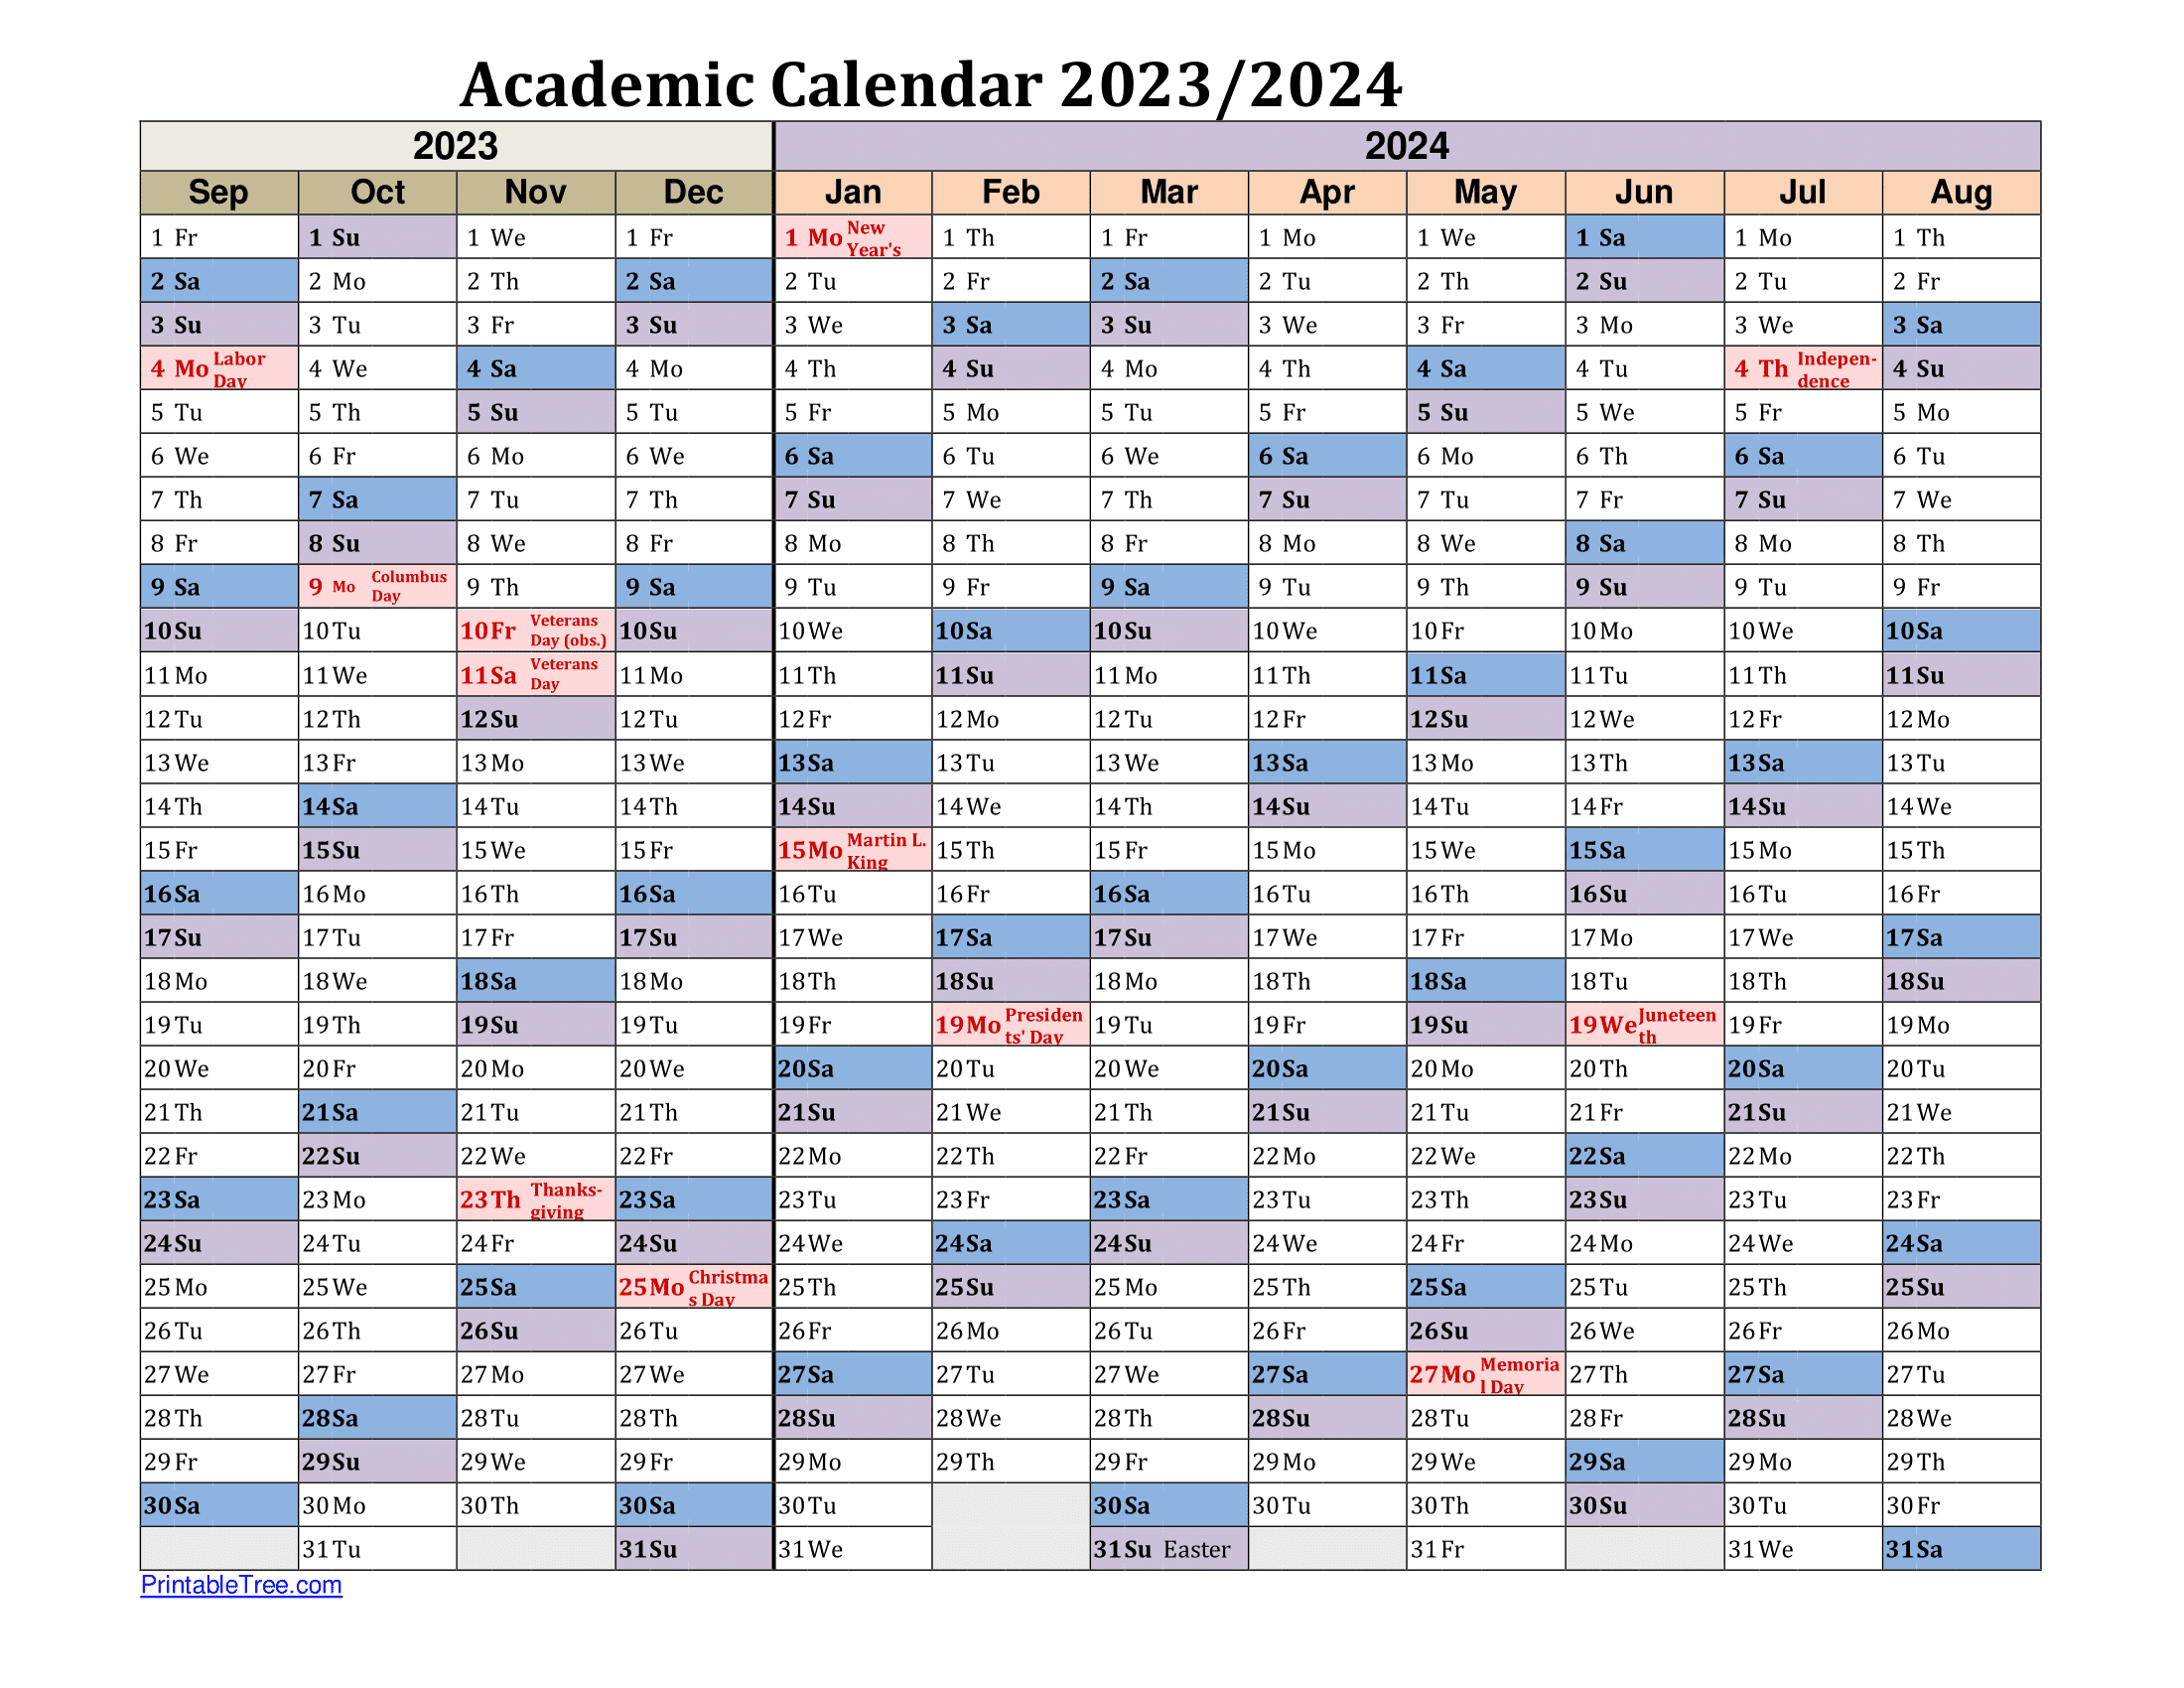 academic-calendar-cornell-2024-2025-carla-cosette